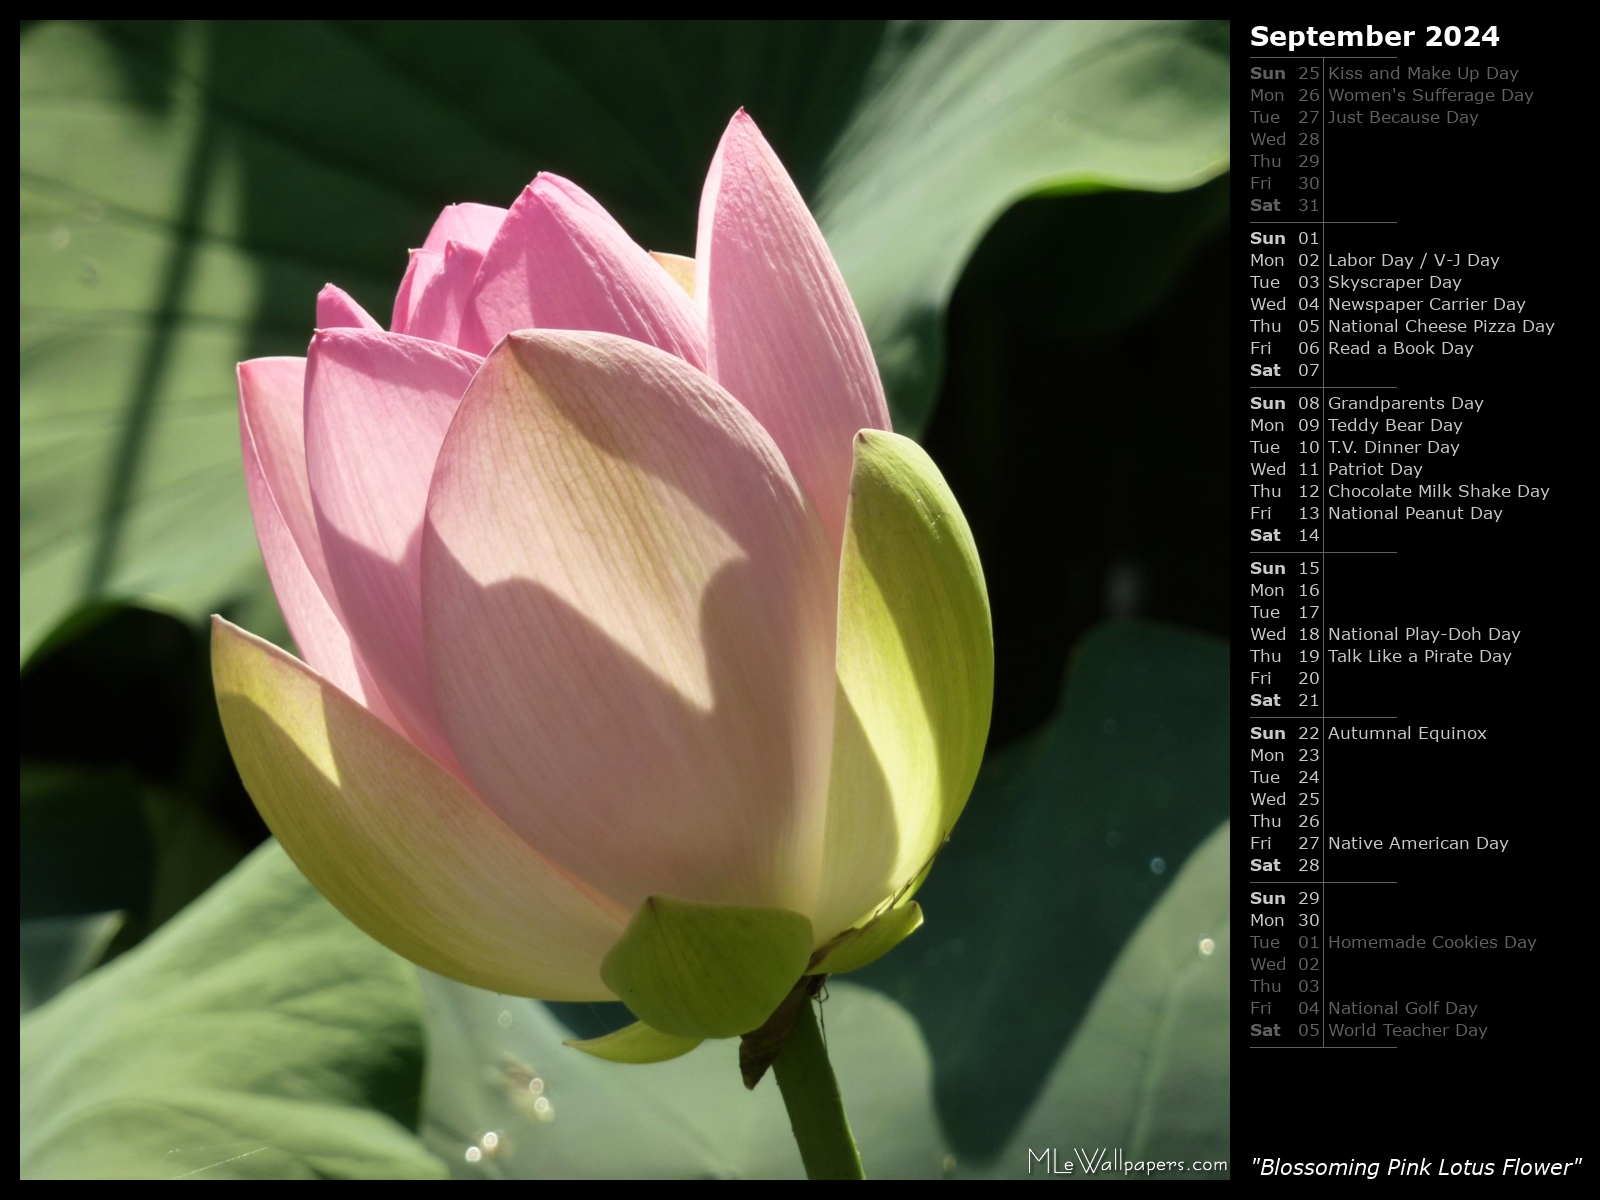 Mlewallpapers Com Blossoming Pink Lotus Flower Calendar Images, Photos, Reviews